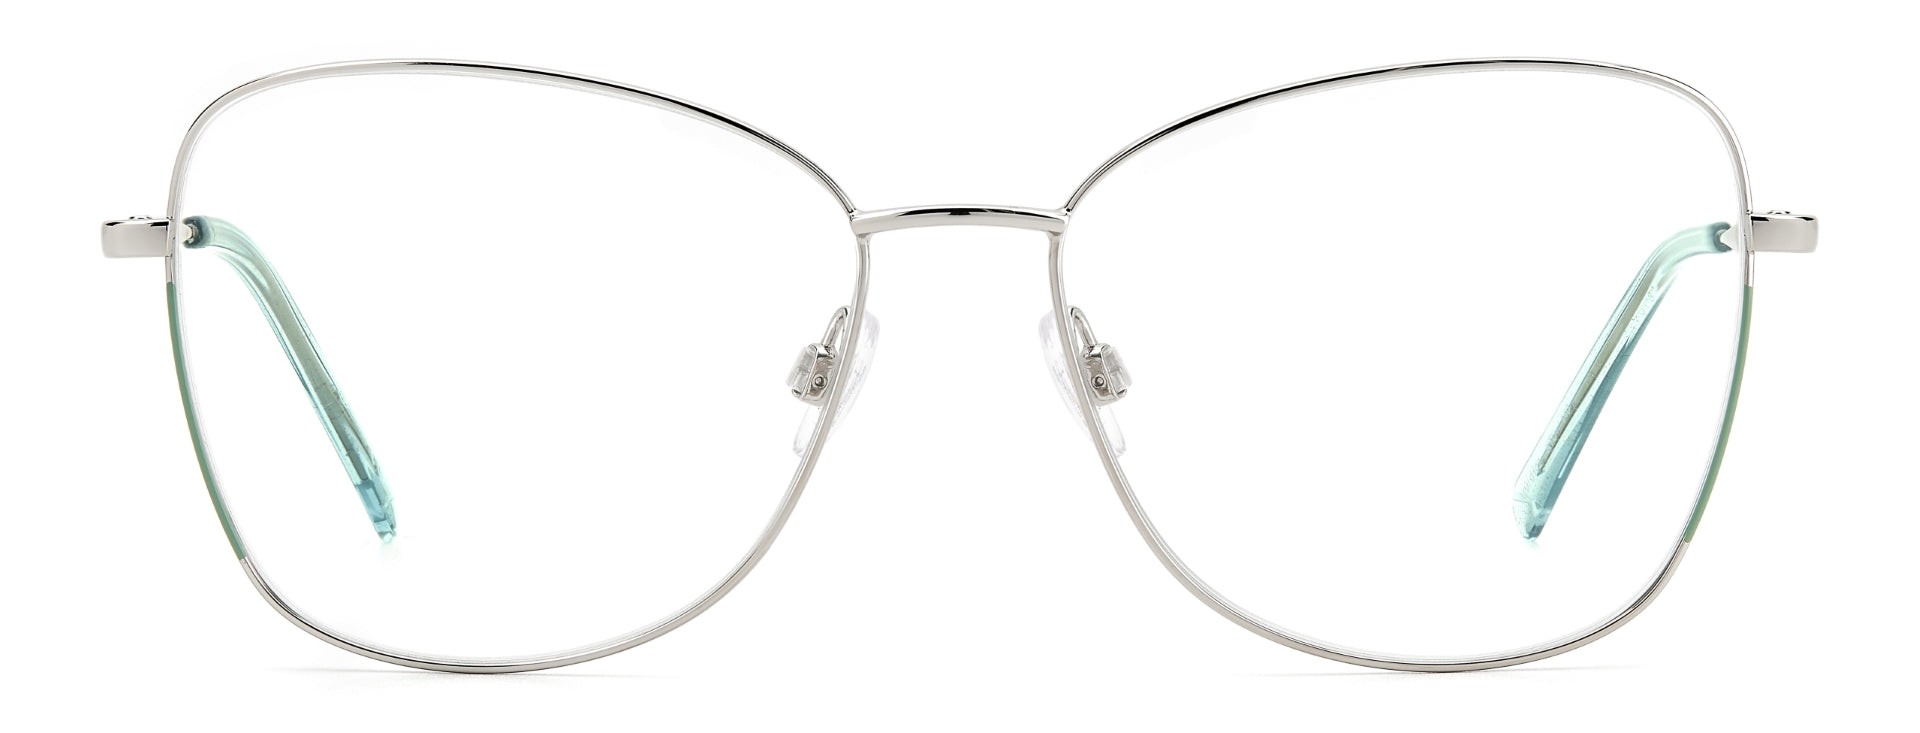 M MISSONI WOMAN BUTTERFLY Eyeglasses-MMI 0102 Size 56